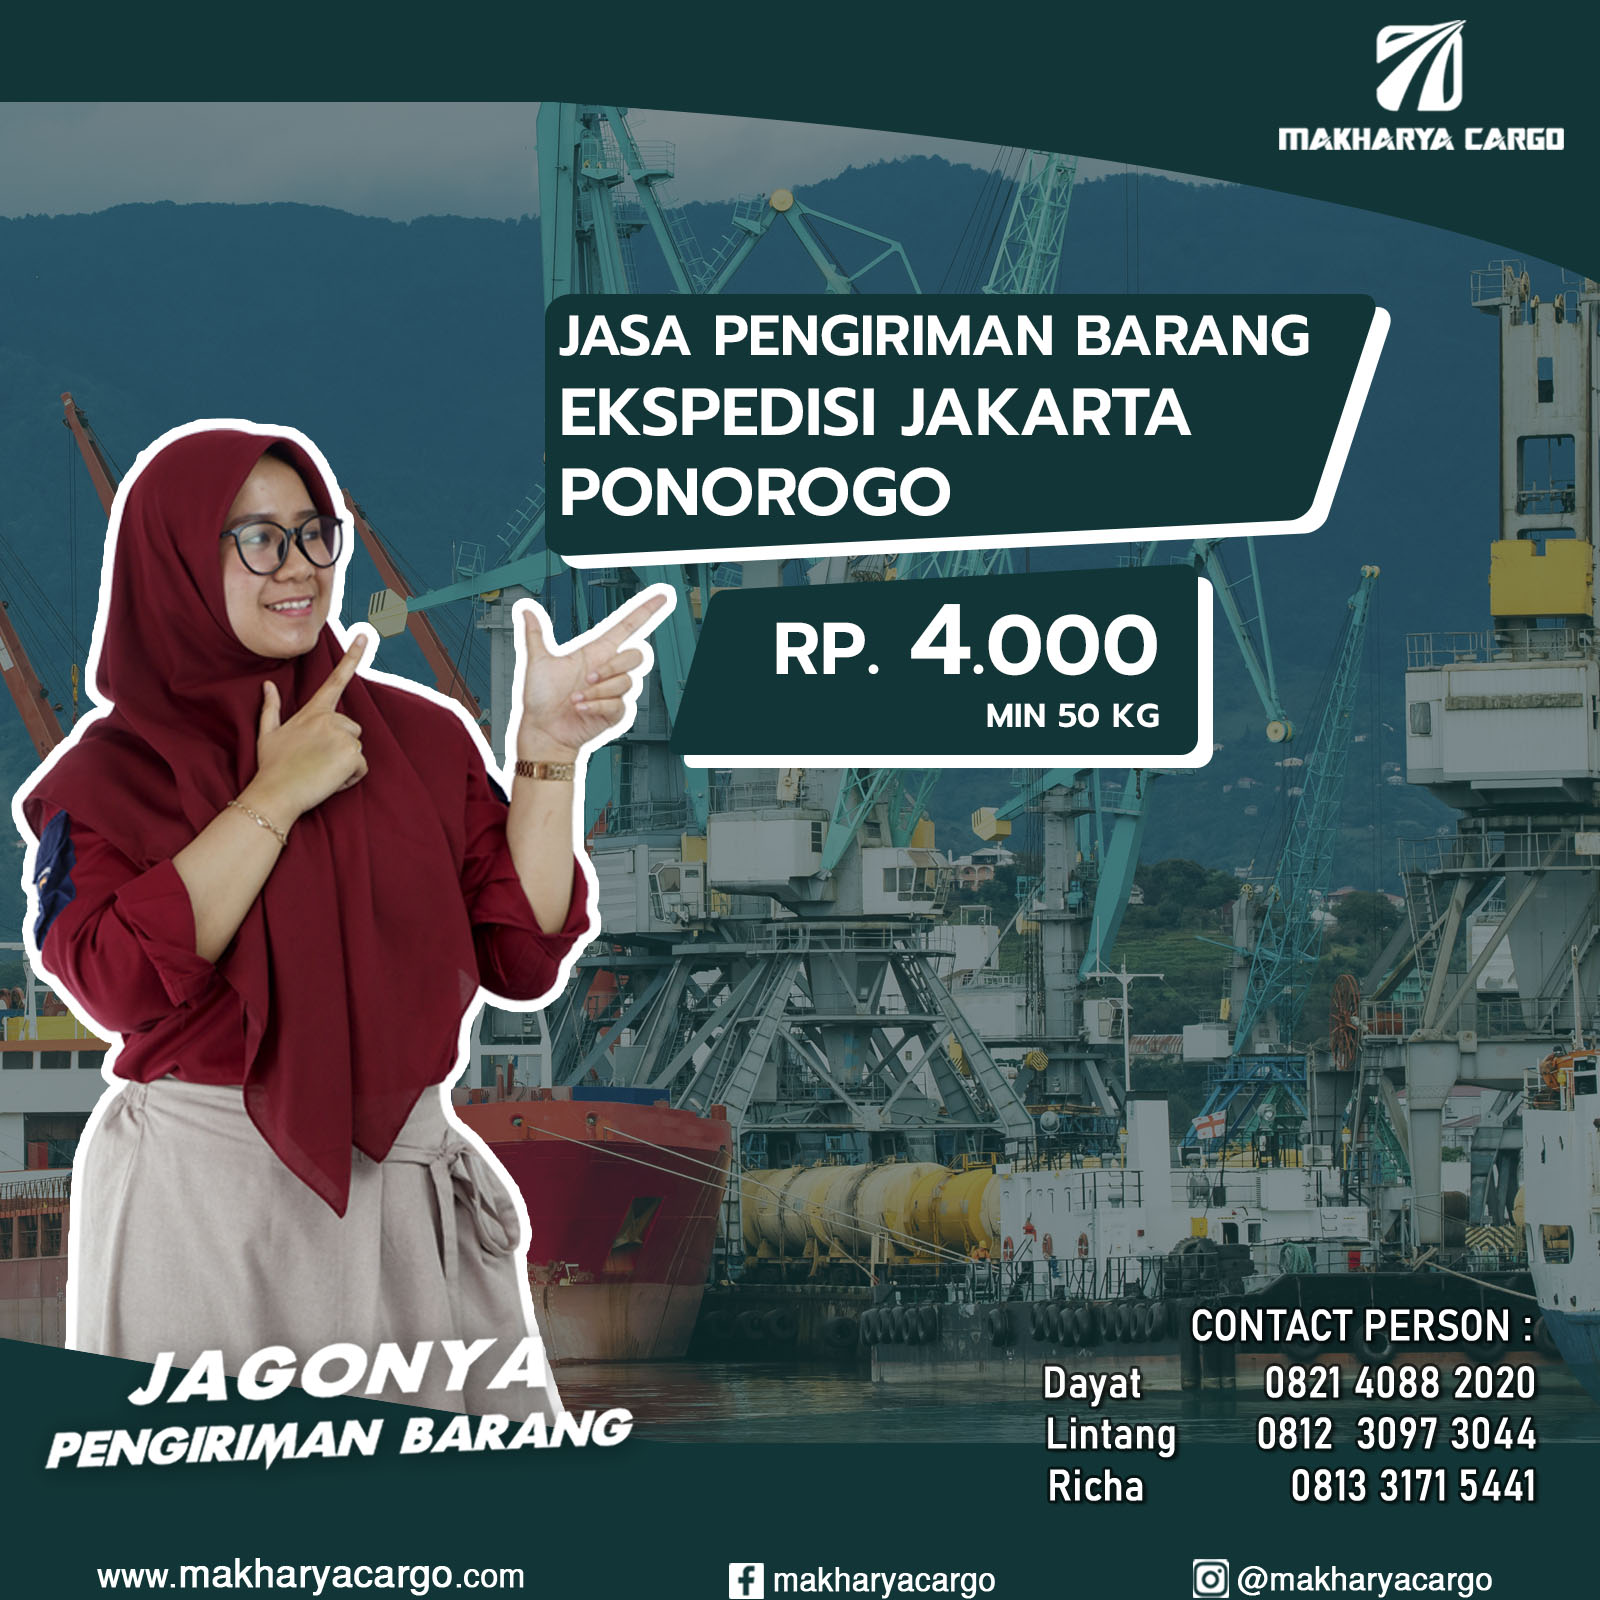 Ekspedisi Jakarta Ponorogo